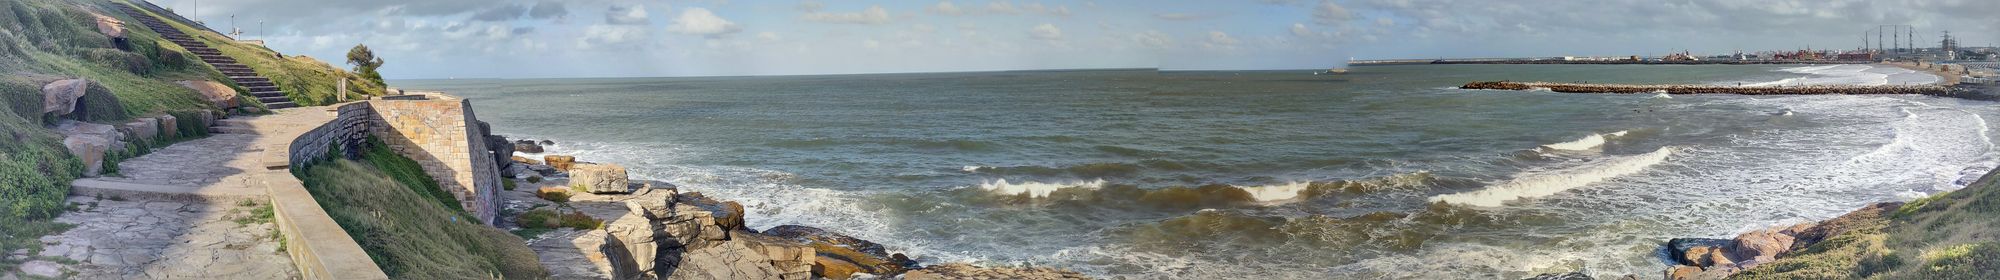 Panorámica del paseo Marítimo de Mar del Plata a la altura del Parque San Martín